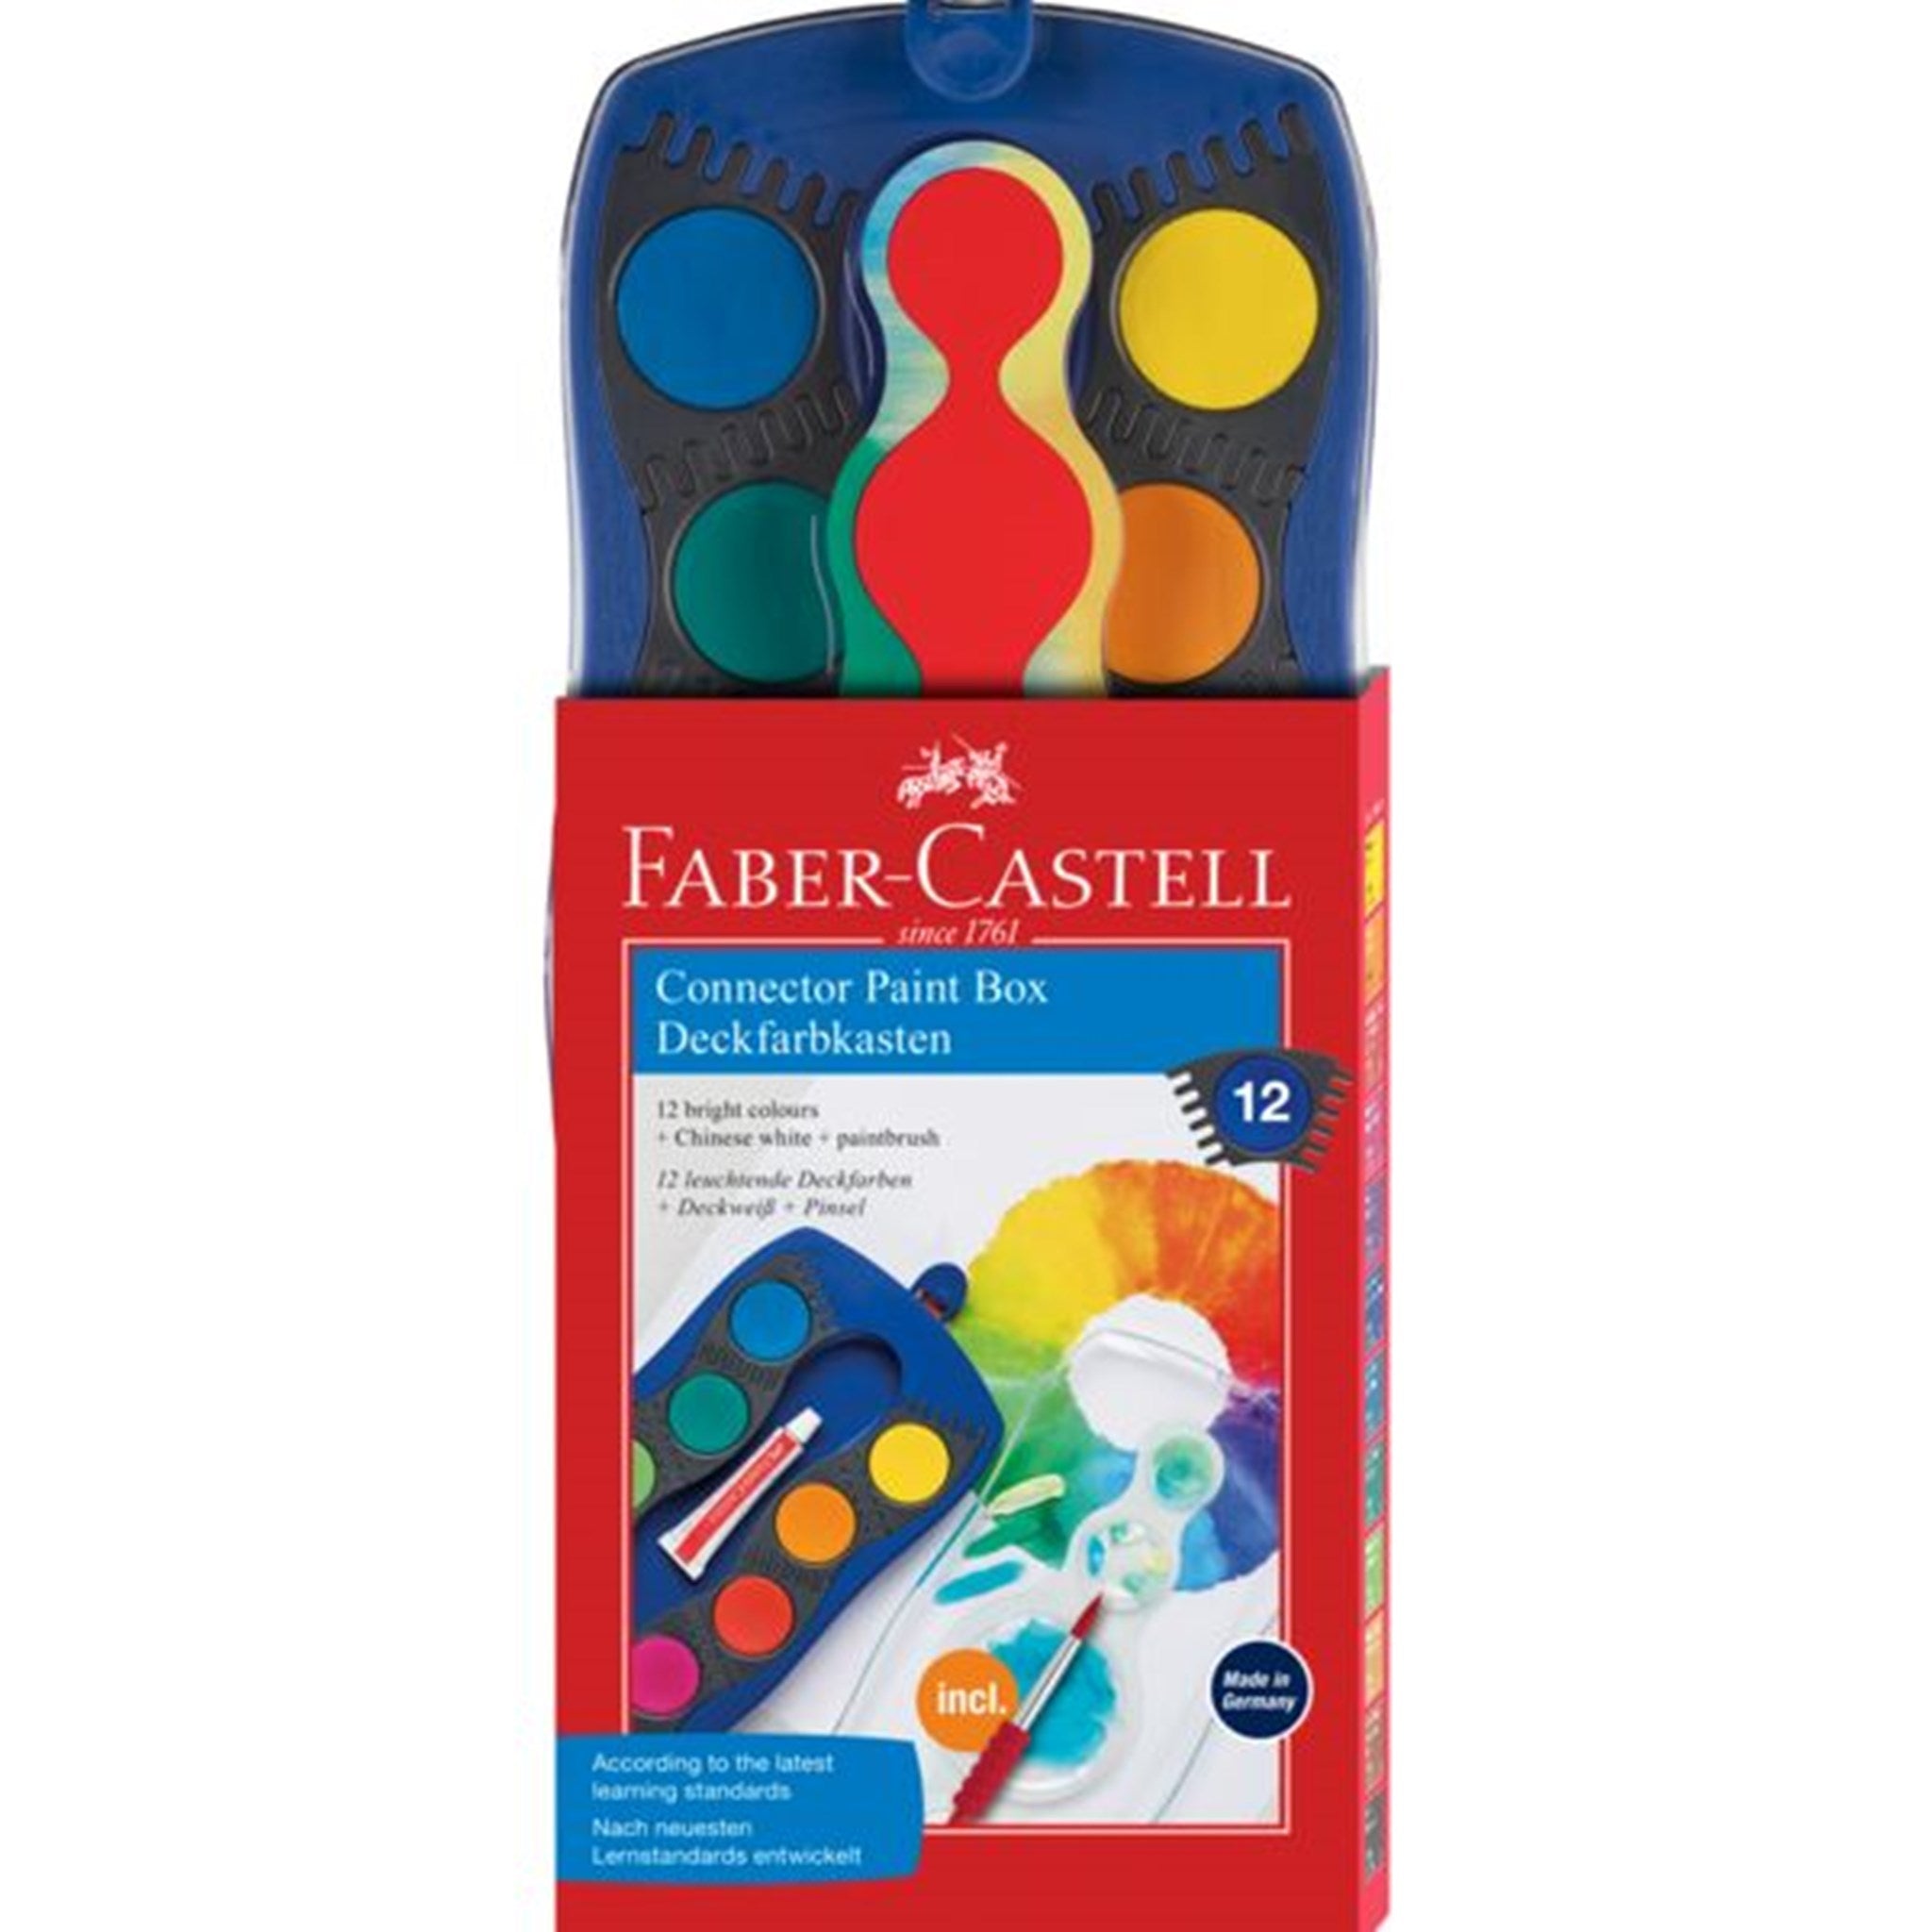 Faber Castell Connector 色盒 12 种颜色不仅仅是普通的铅笔盒